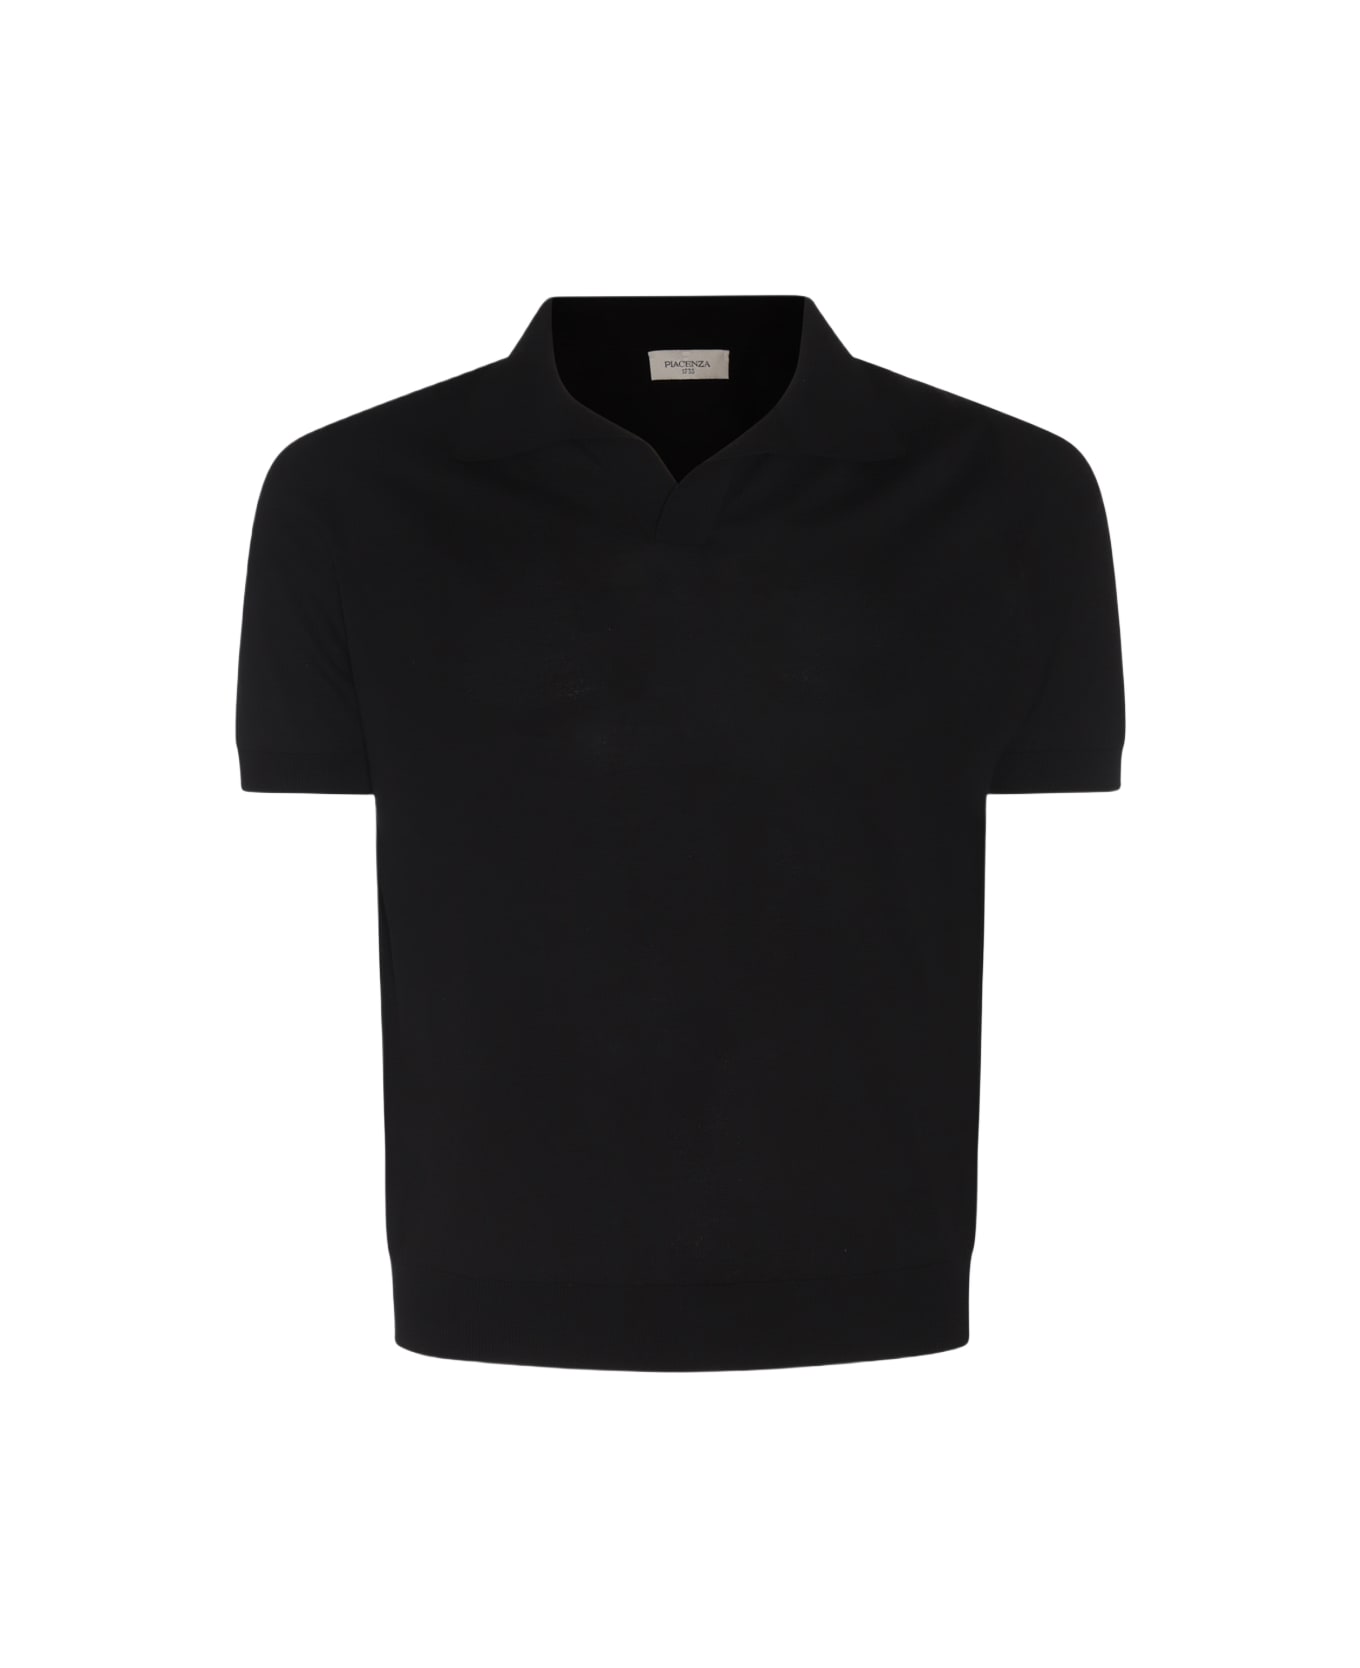 Piacenza Cashmere Black Cotton Polo Shirt - Black